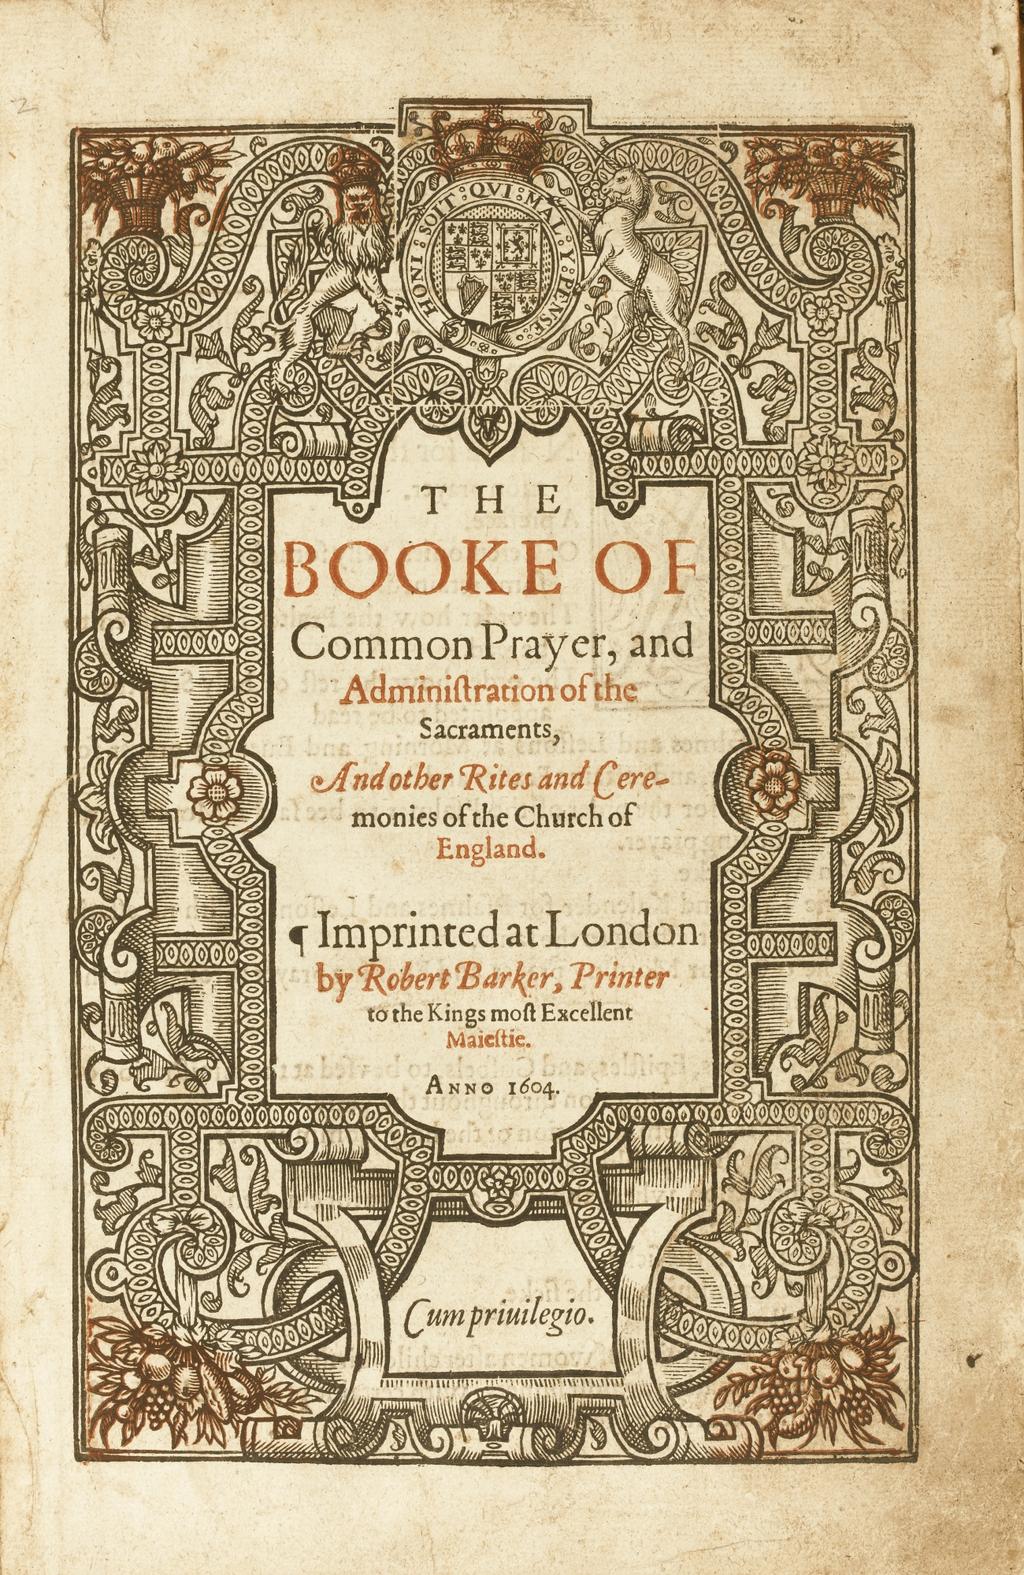 1662 prayer